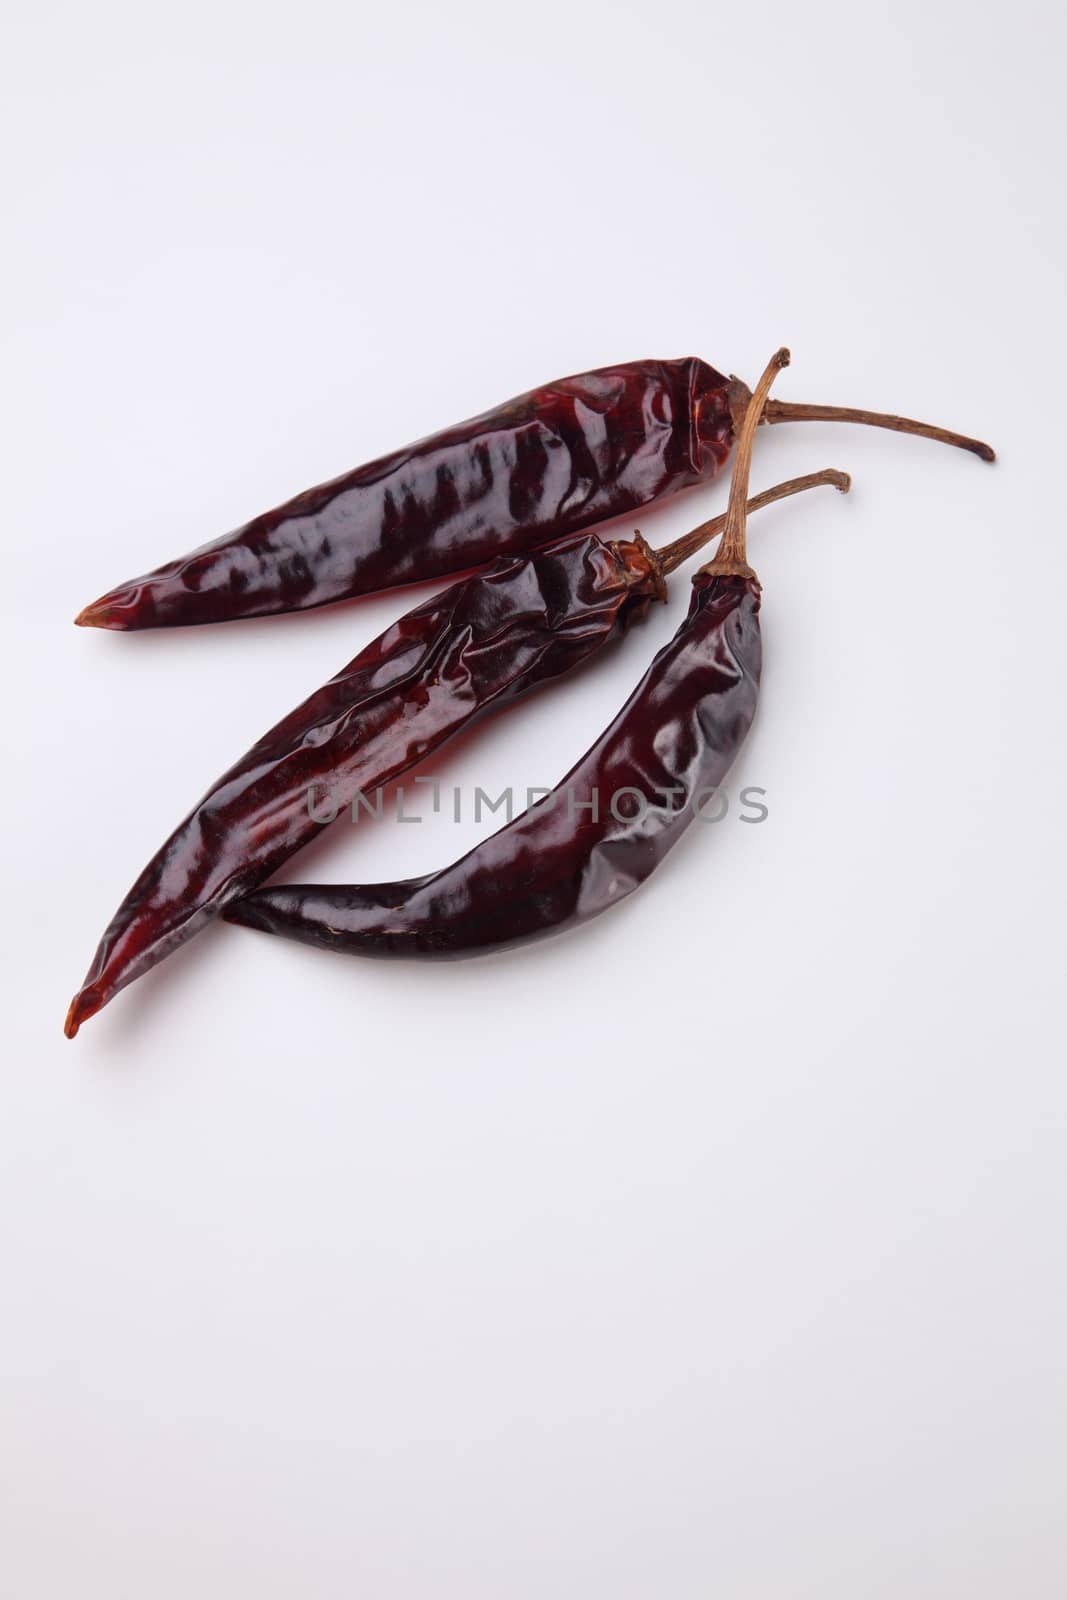 dried chili peppers by eskaylim